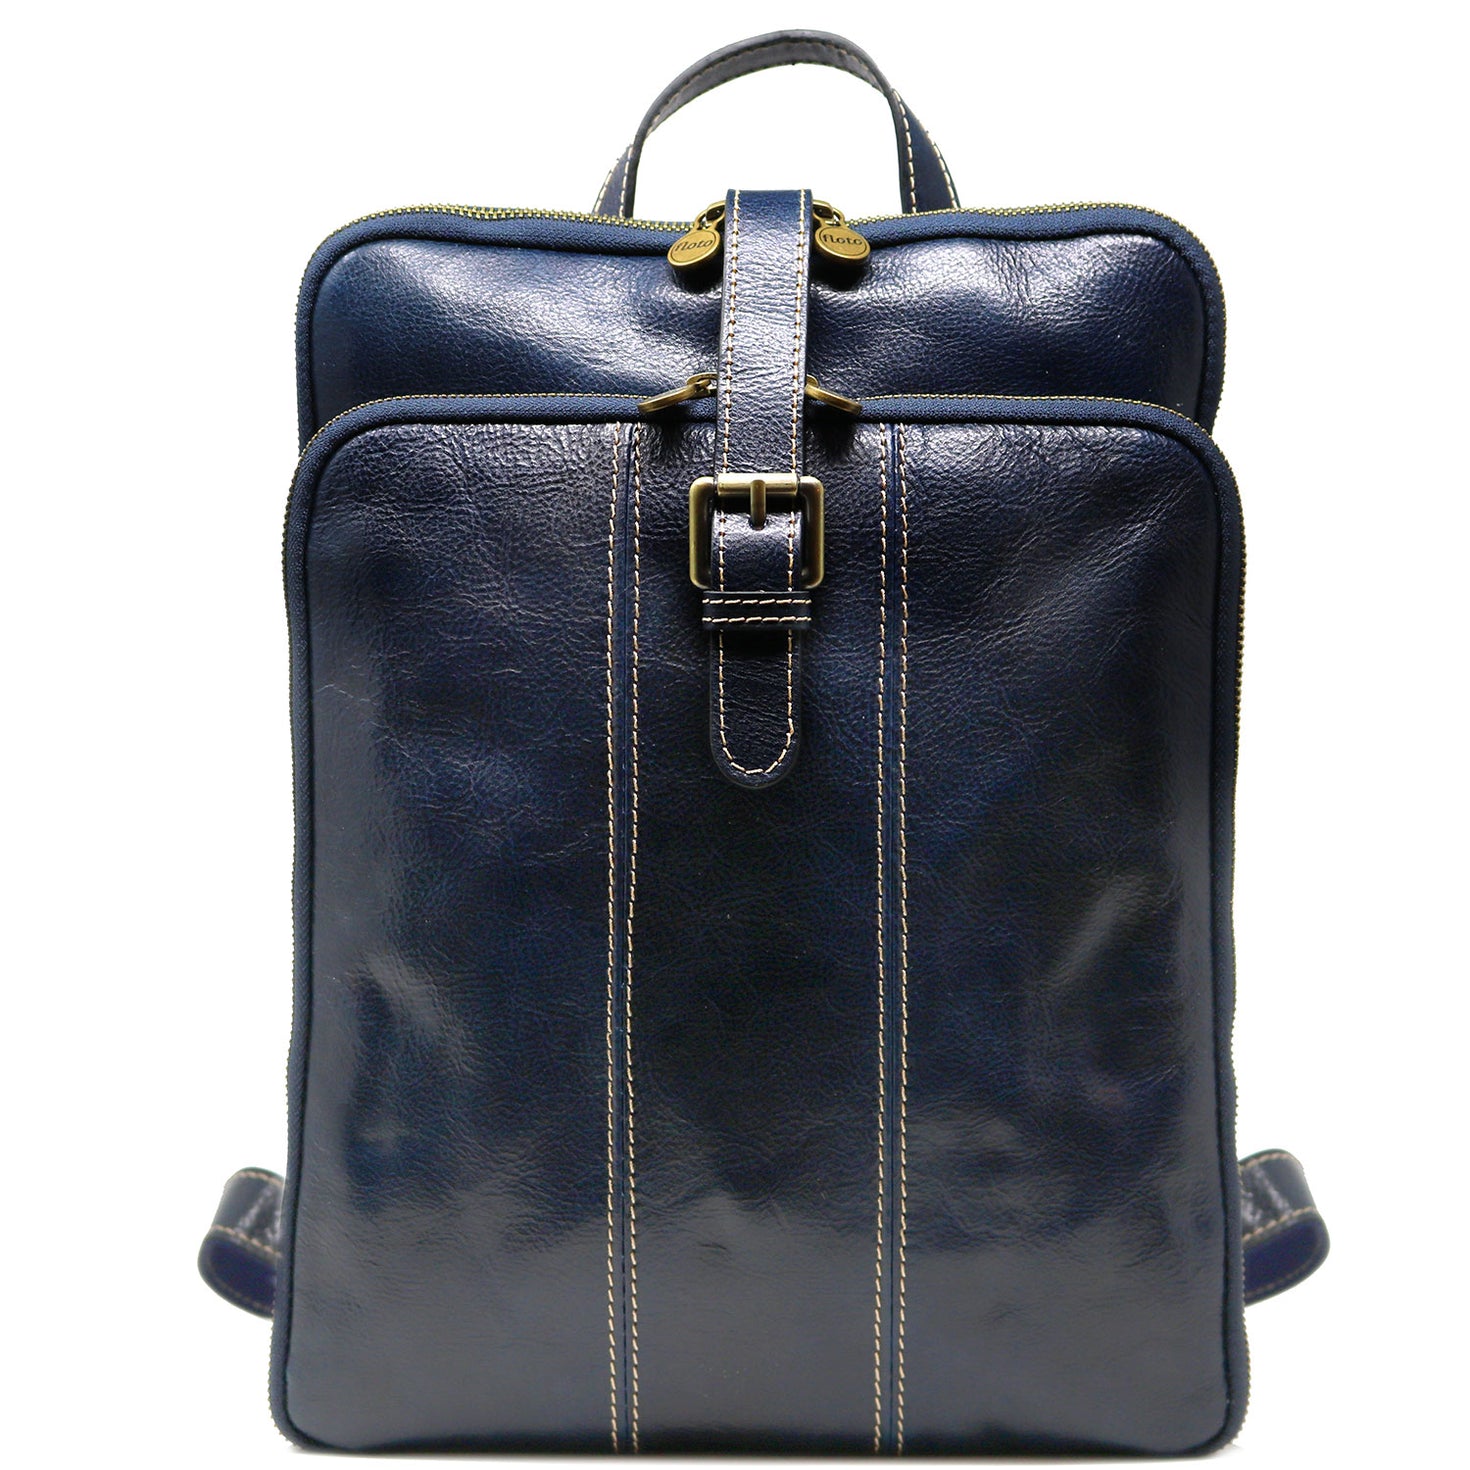 Floto Venezia Italian Leather Knapsack Backpack